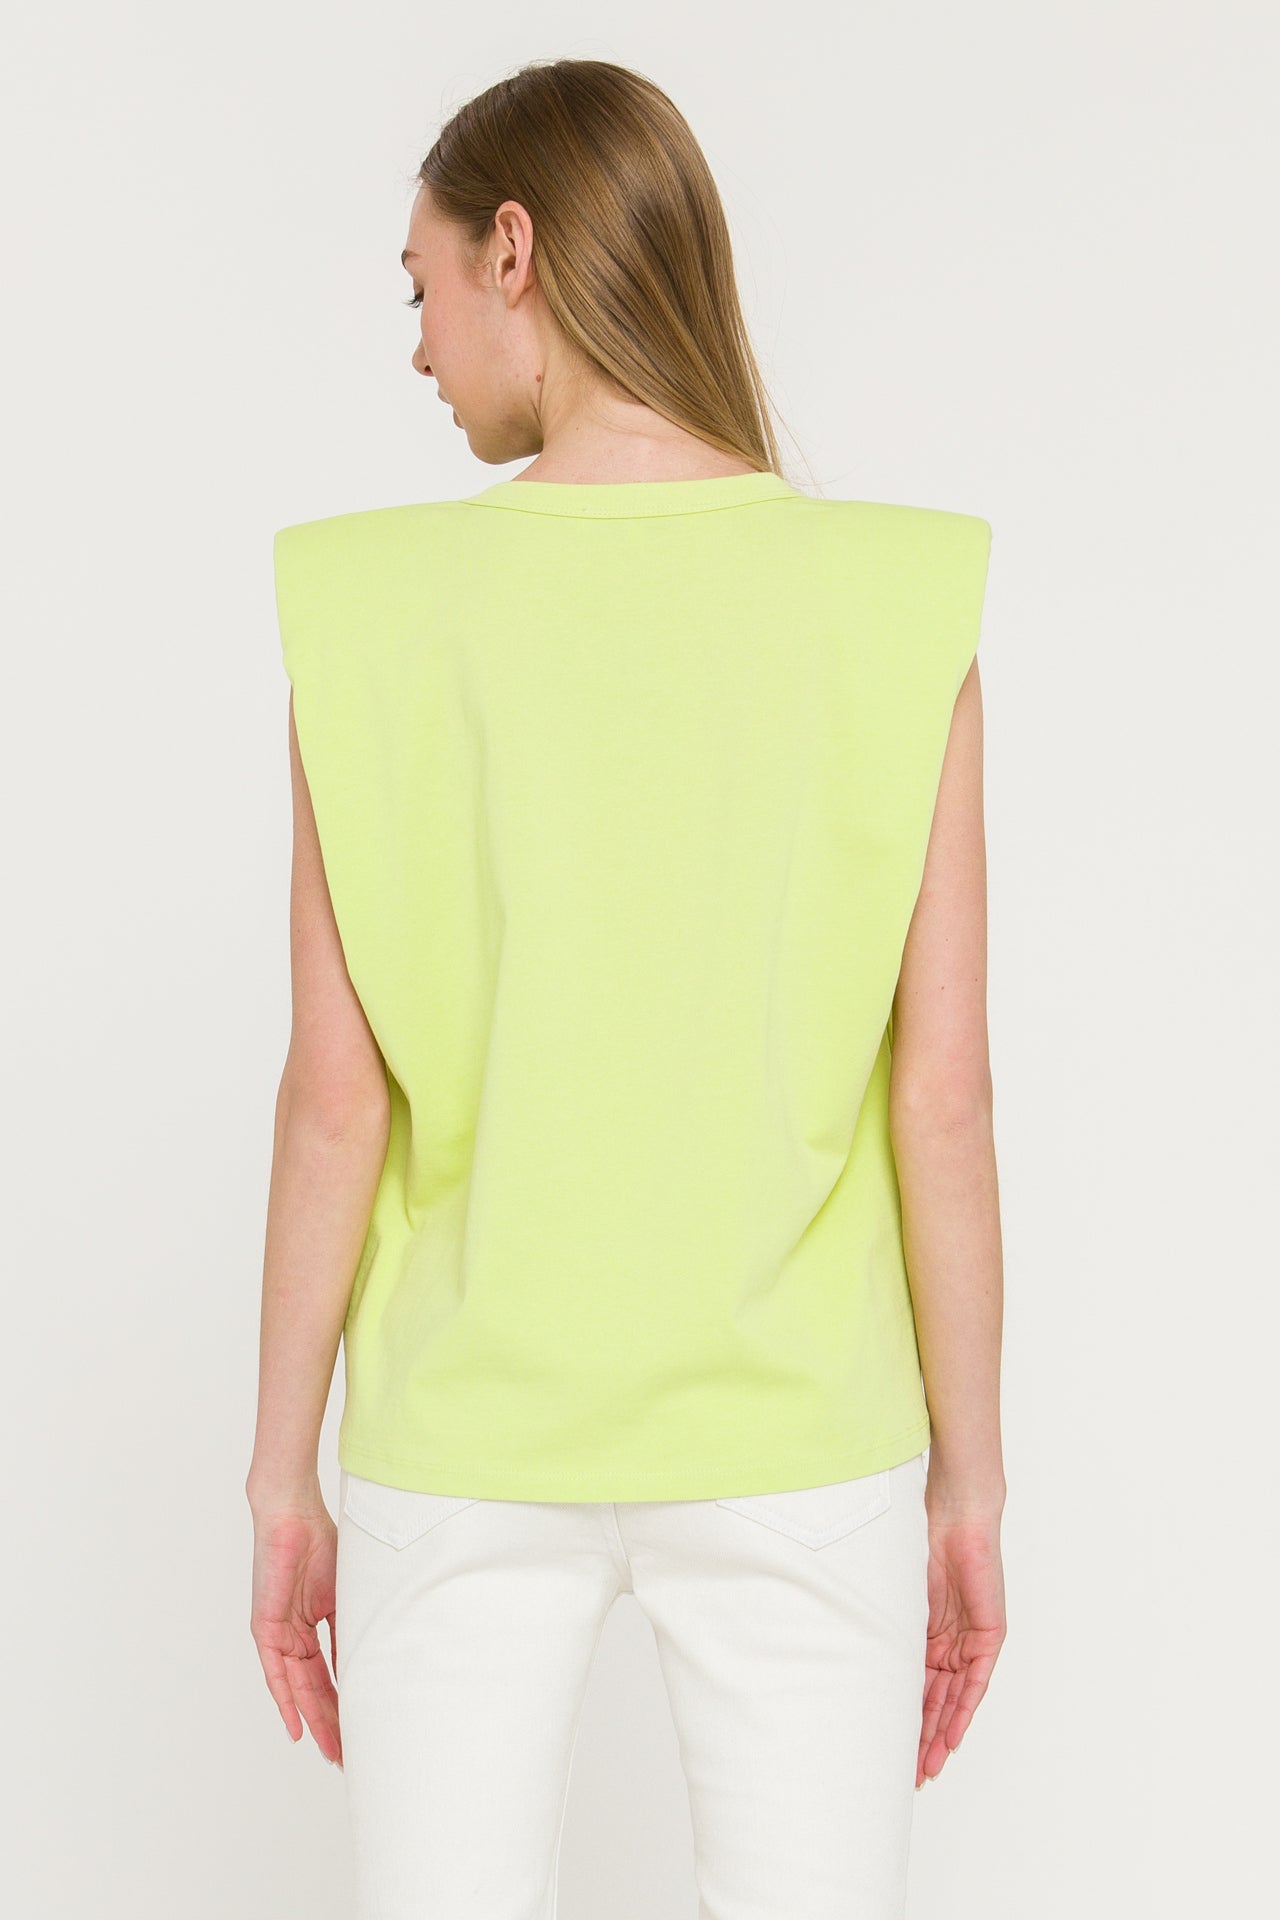 ENDLESS ROSE - Shoulder Pad Shirt - T-SHIRTS available at Objectrare